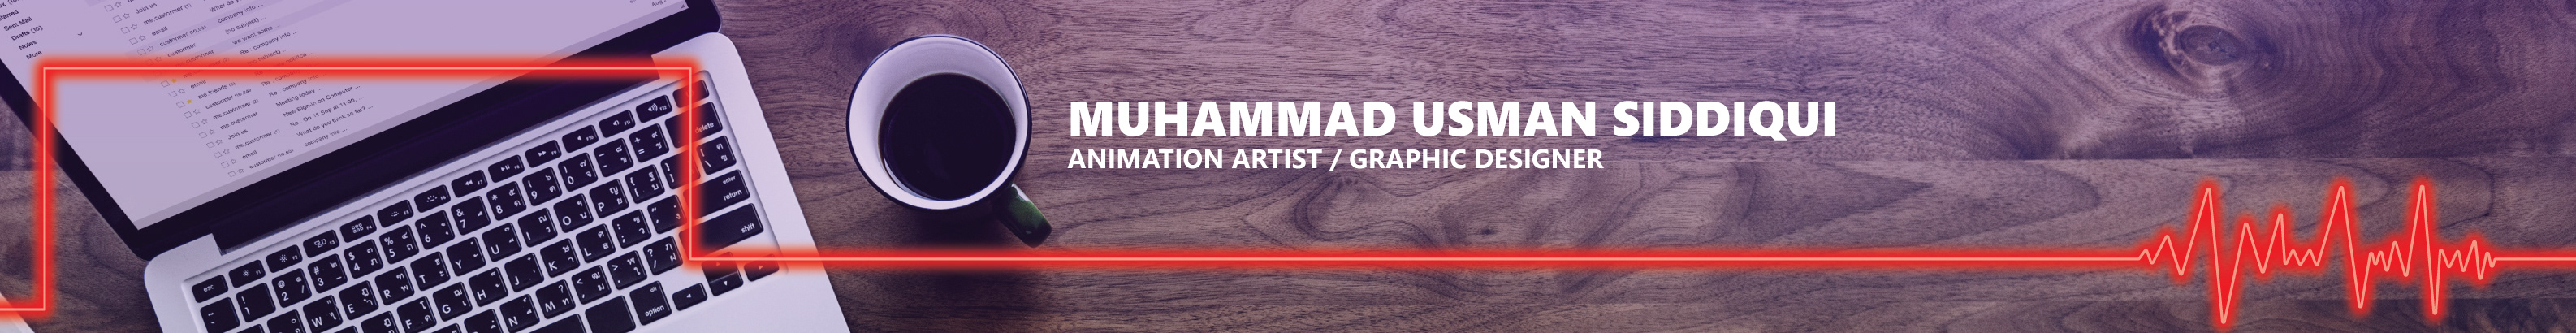 Muhammad Usman Siddiqui's profile banner